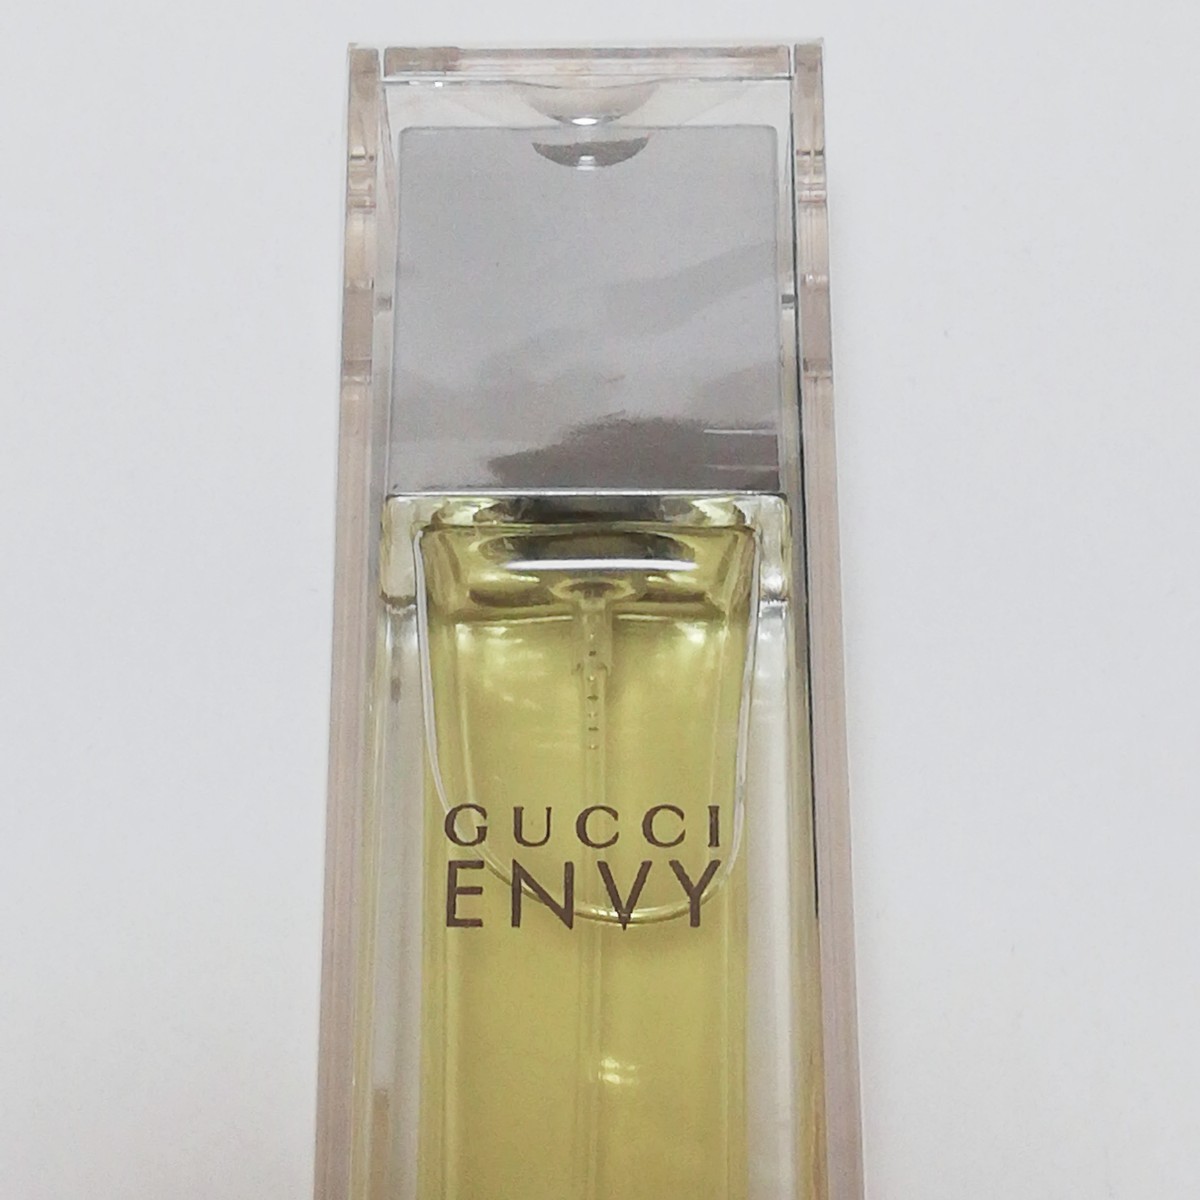  бесплатная доставка GUCCI Gucci ENVY Envy o-doto трещина 30ml духи быстрое решение 